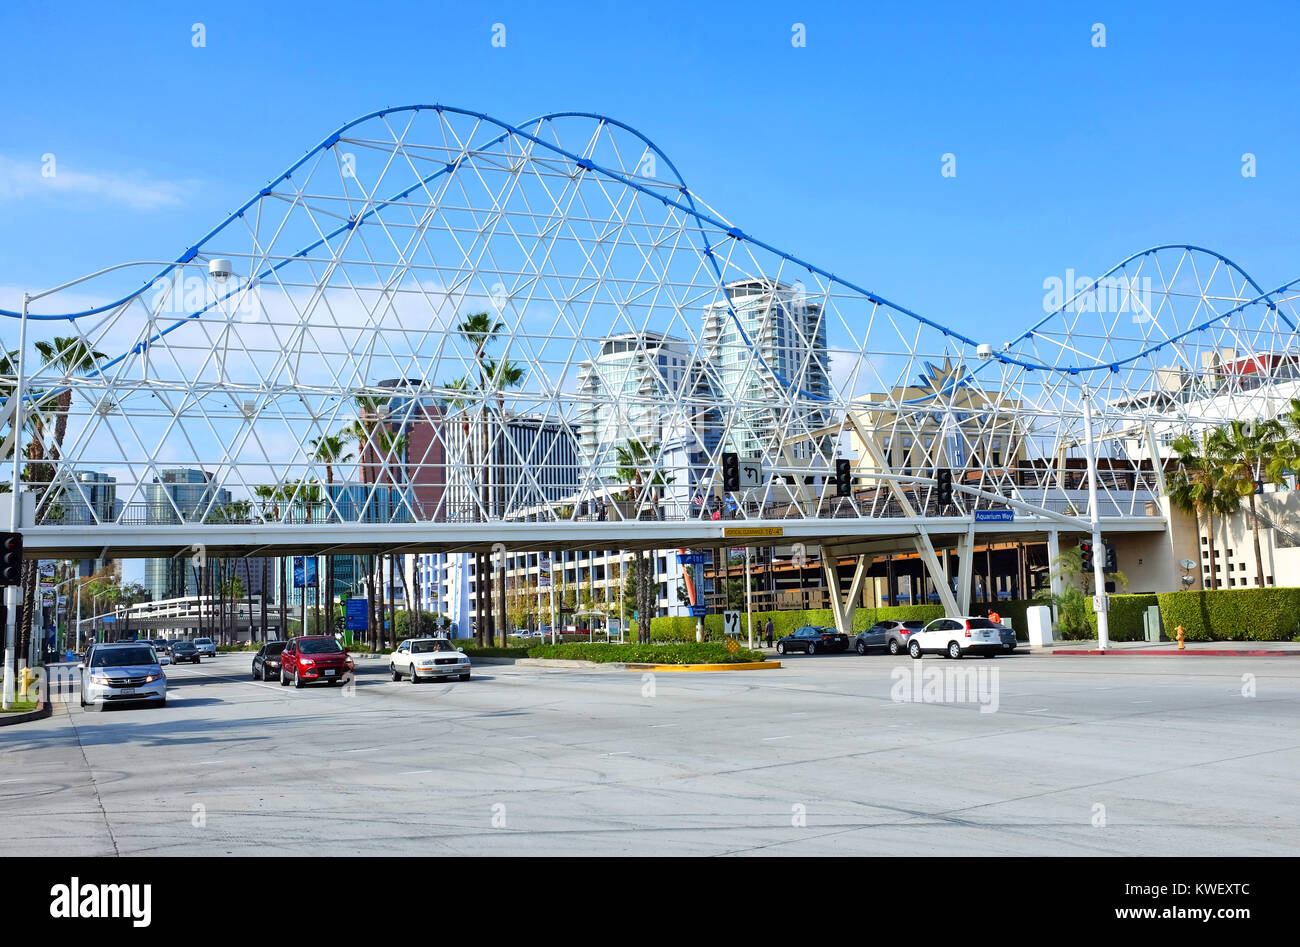 LONG BEACH, CA - FEBRUARY 21, 2015: Pedestrian bridge over Shoreline Drive, Long Beach. The bridge mimics the legendary Cyclone Racer roller coaster,  Stock Photo